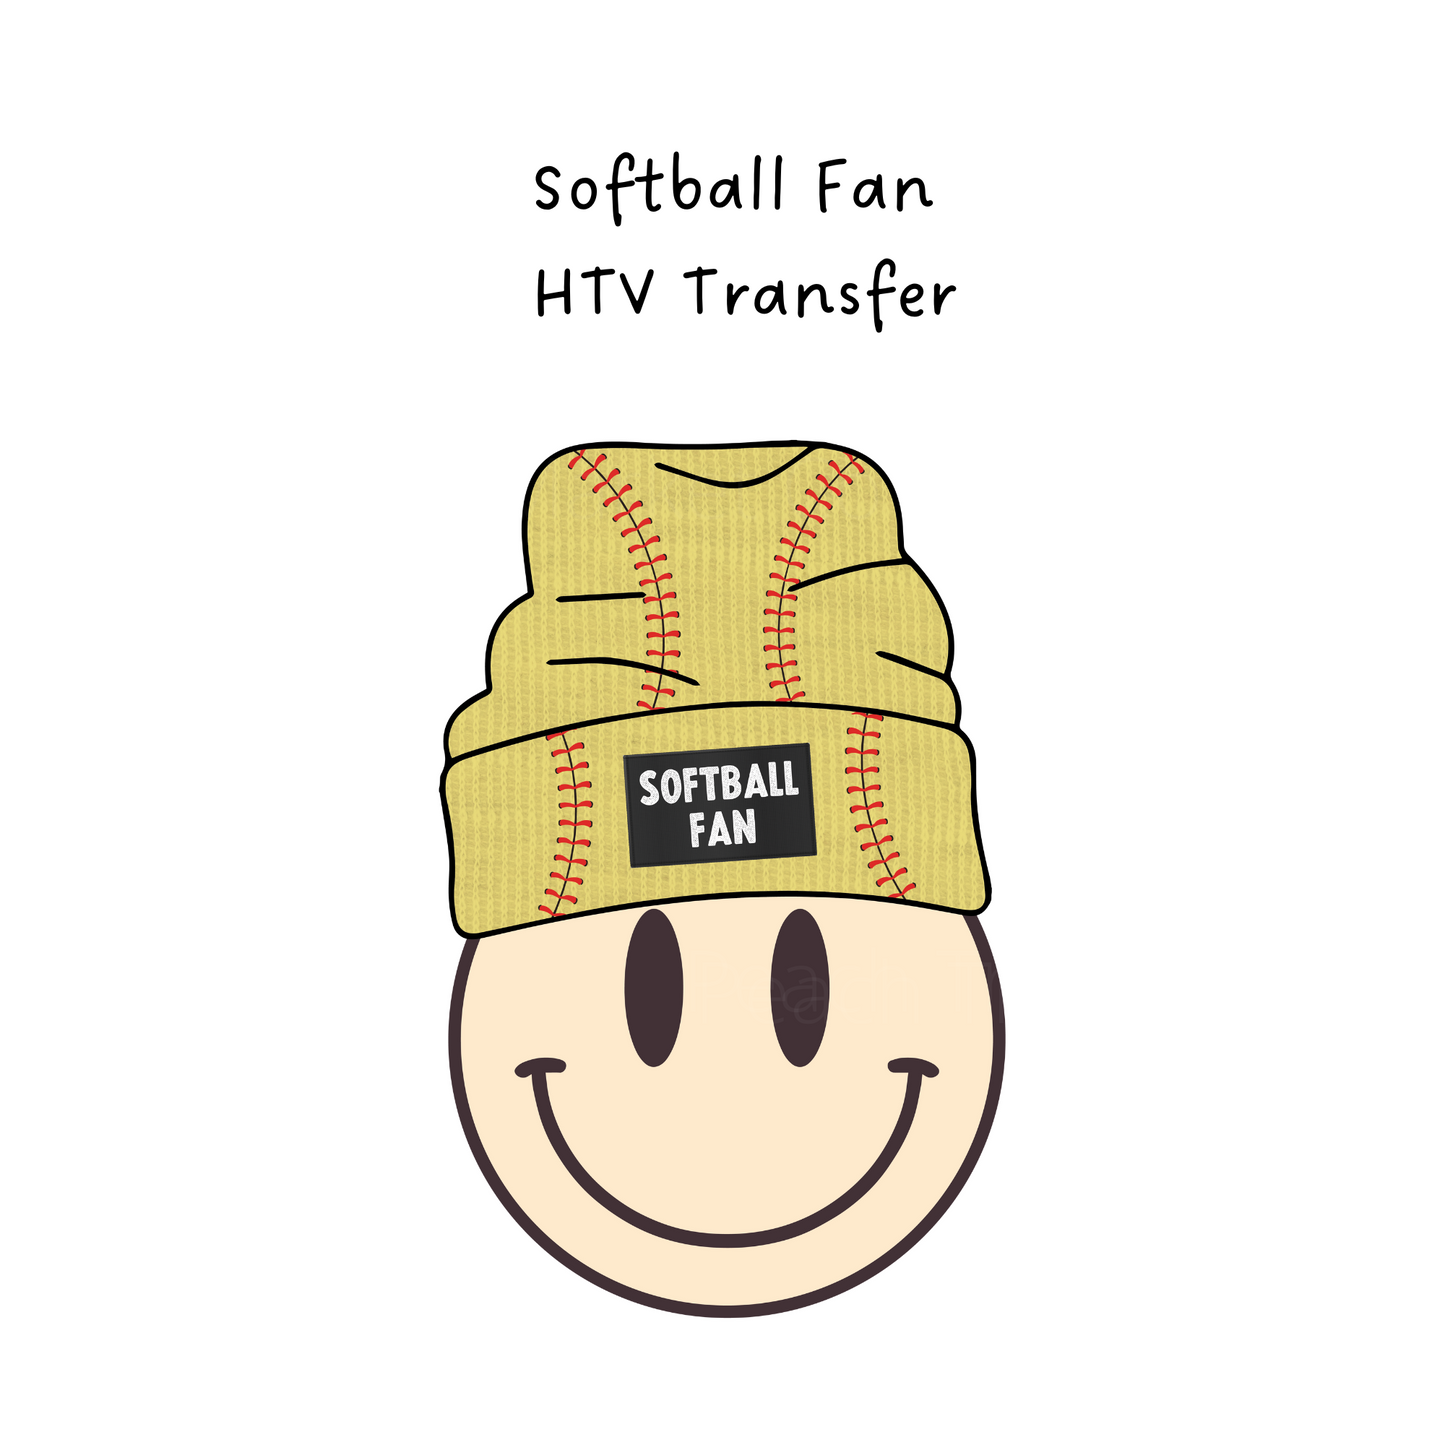 Softball Fan HTV Transfer